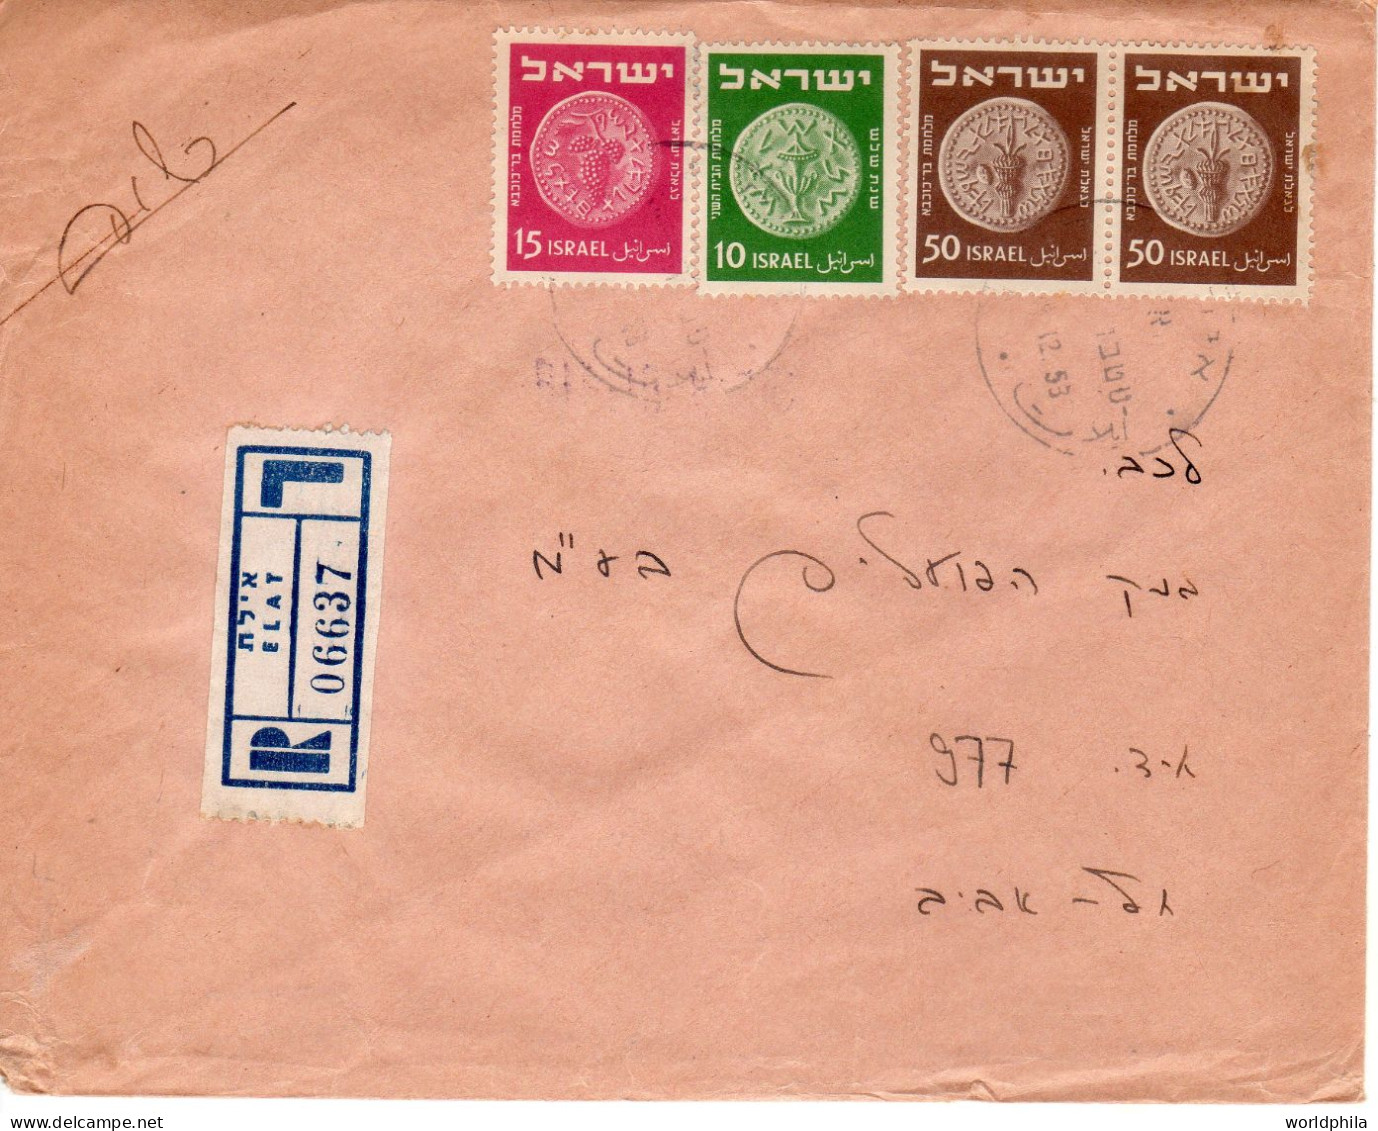 Israel 1952-1954 interesting post marks lot of 5 registered cover II